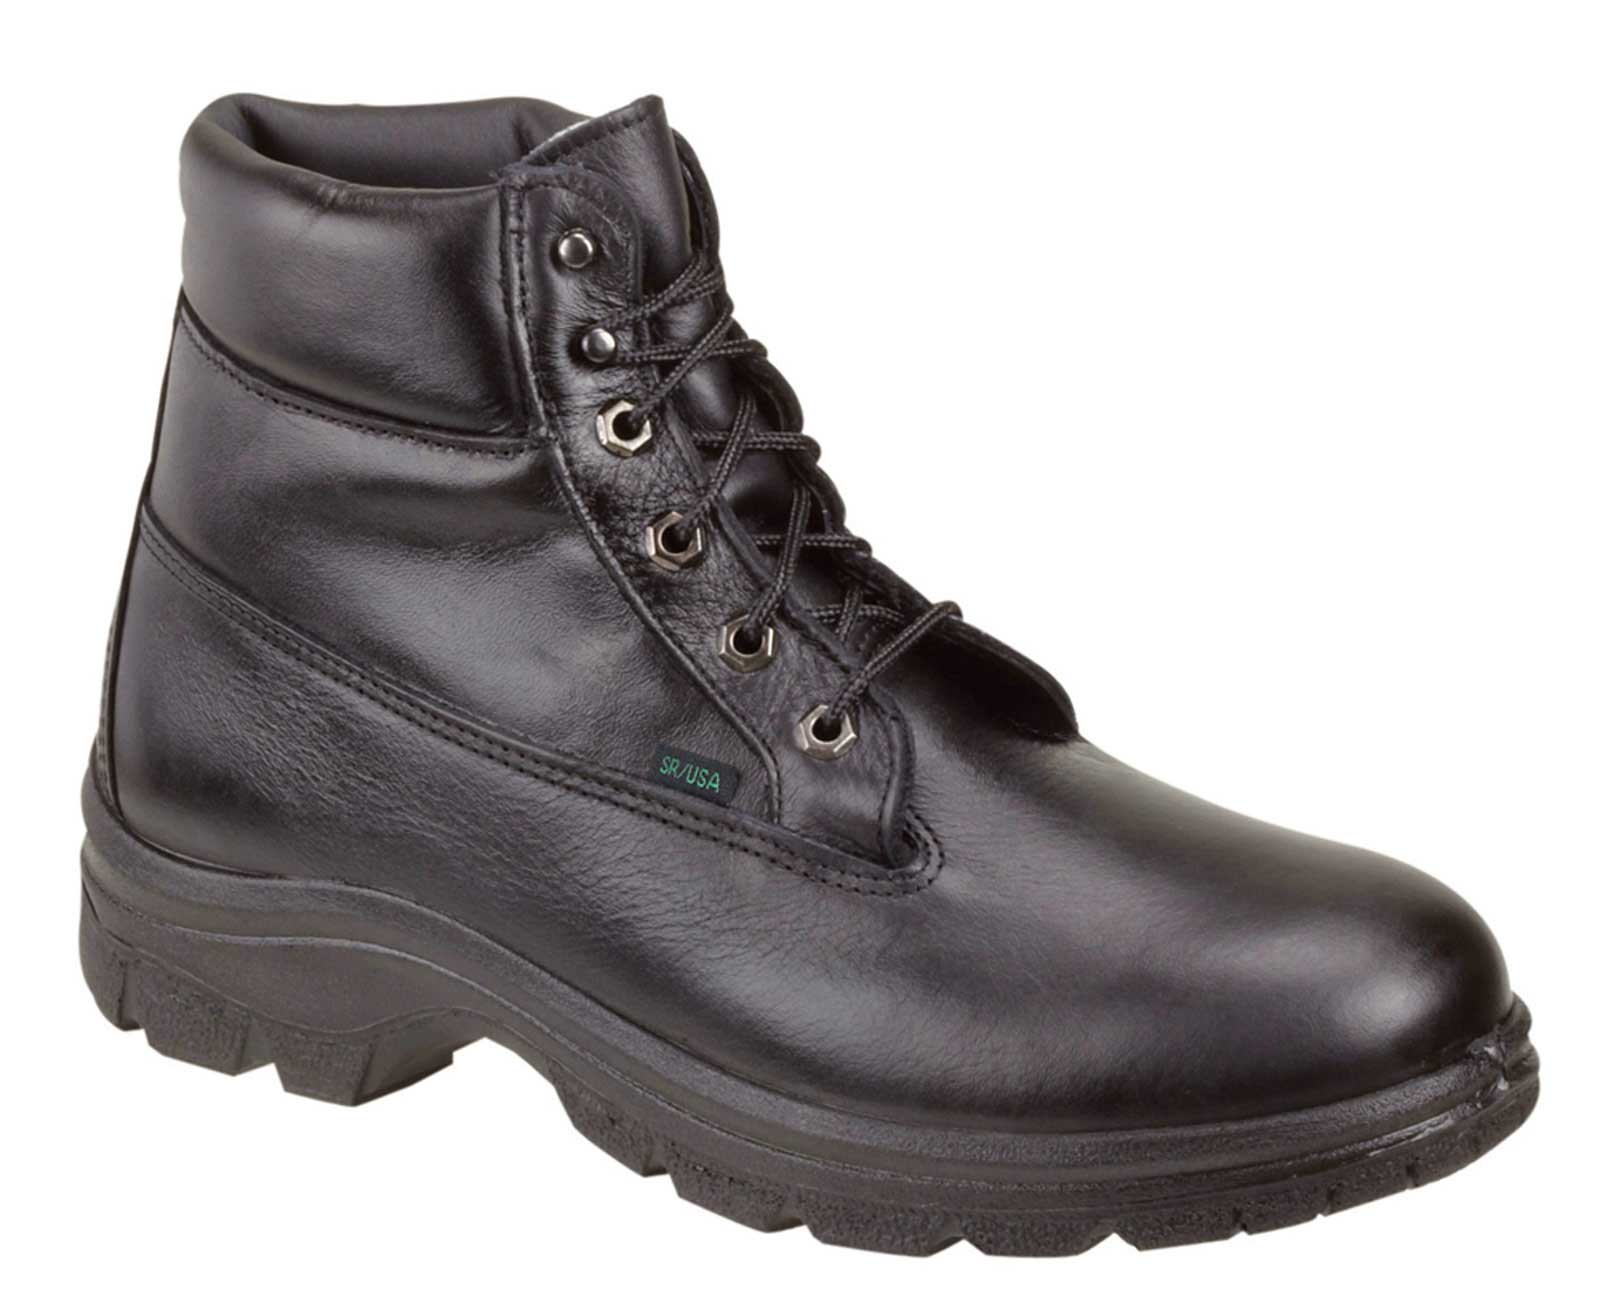 Waterproof Insulated Work Boots (U.S.A. 